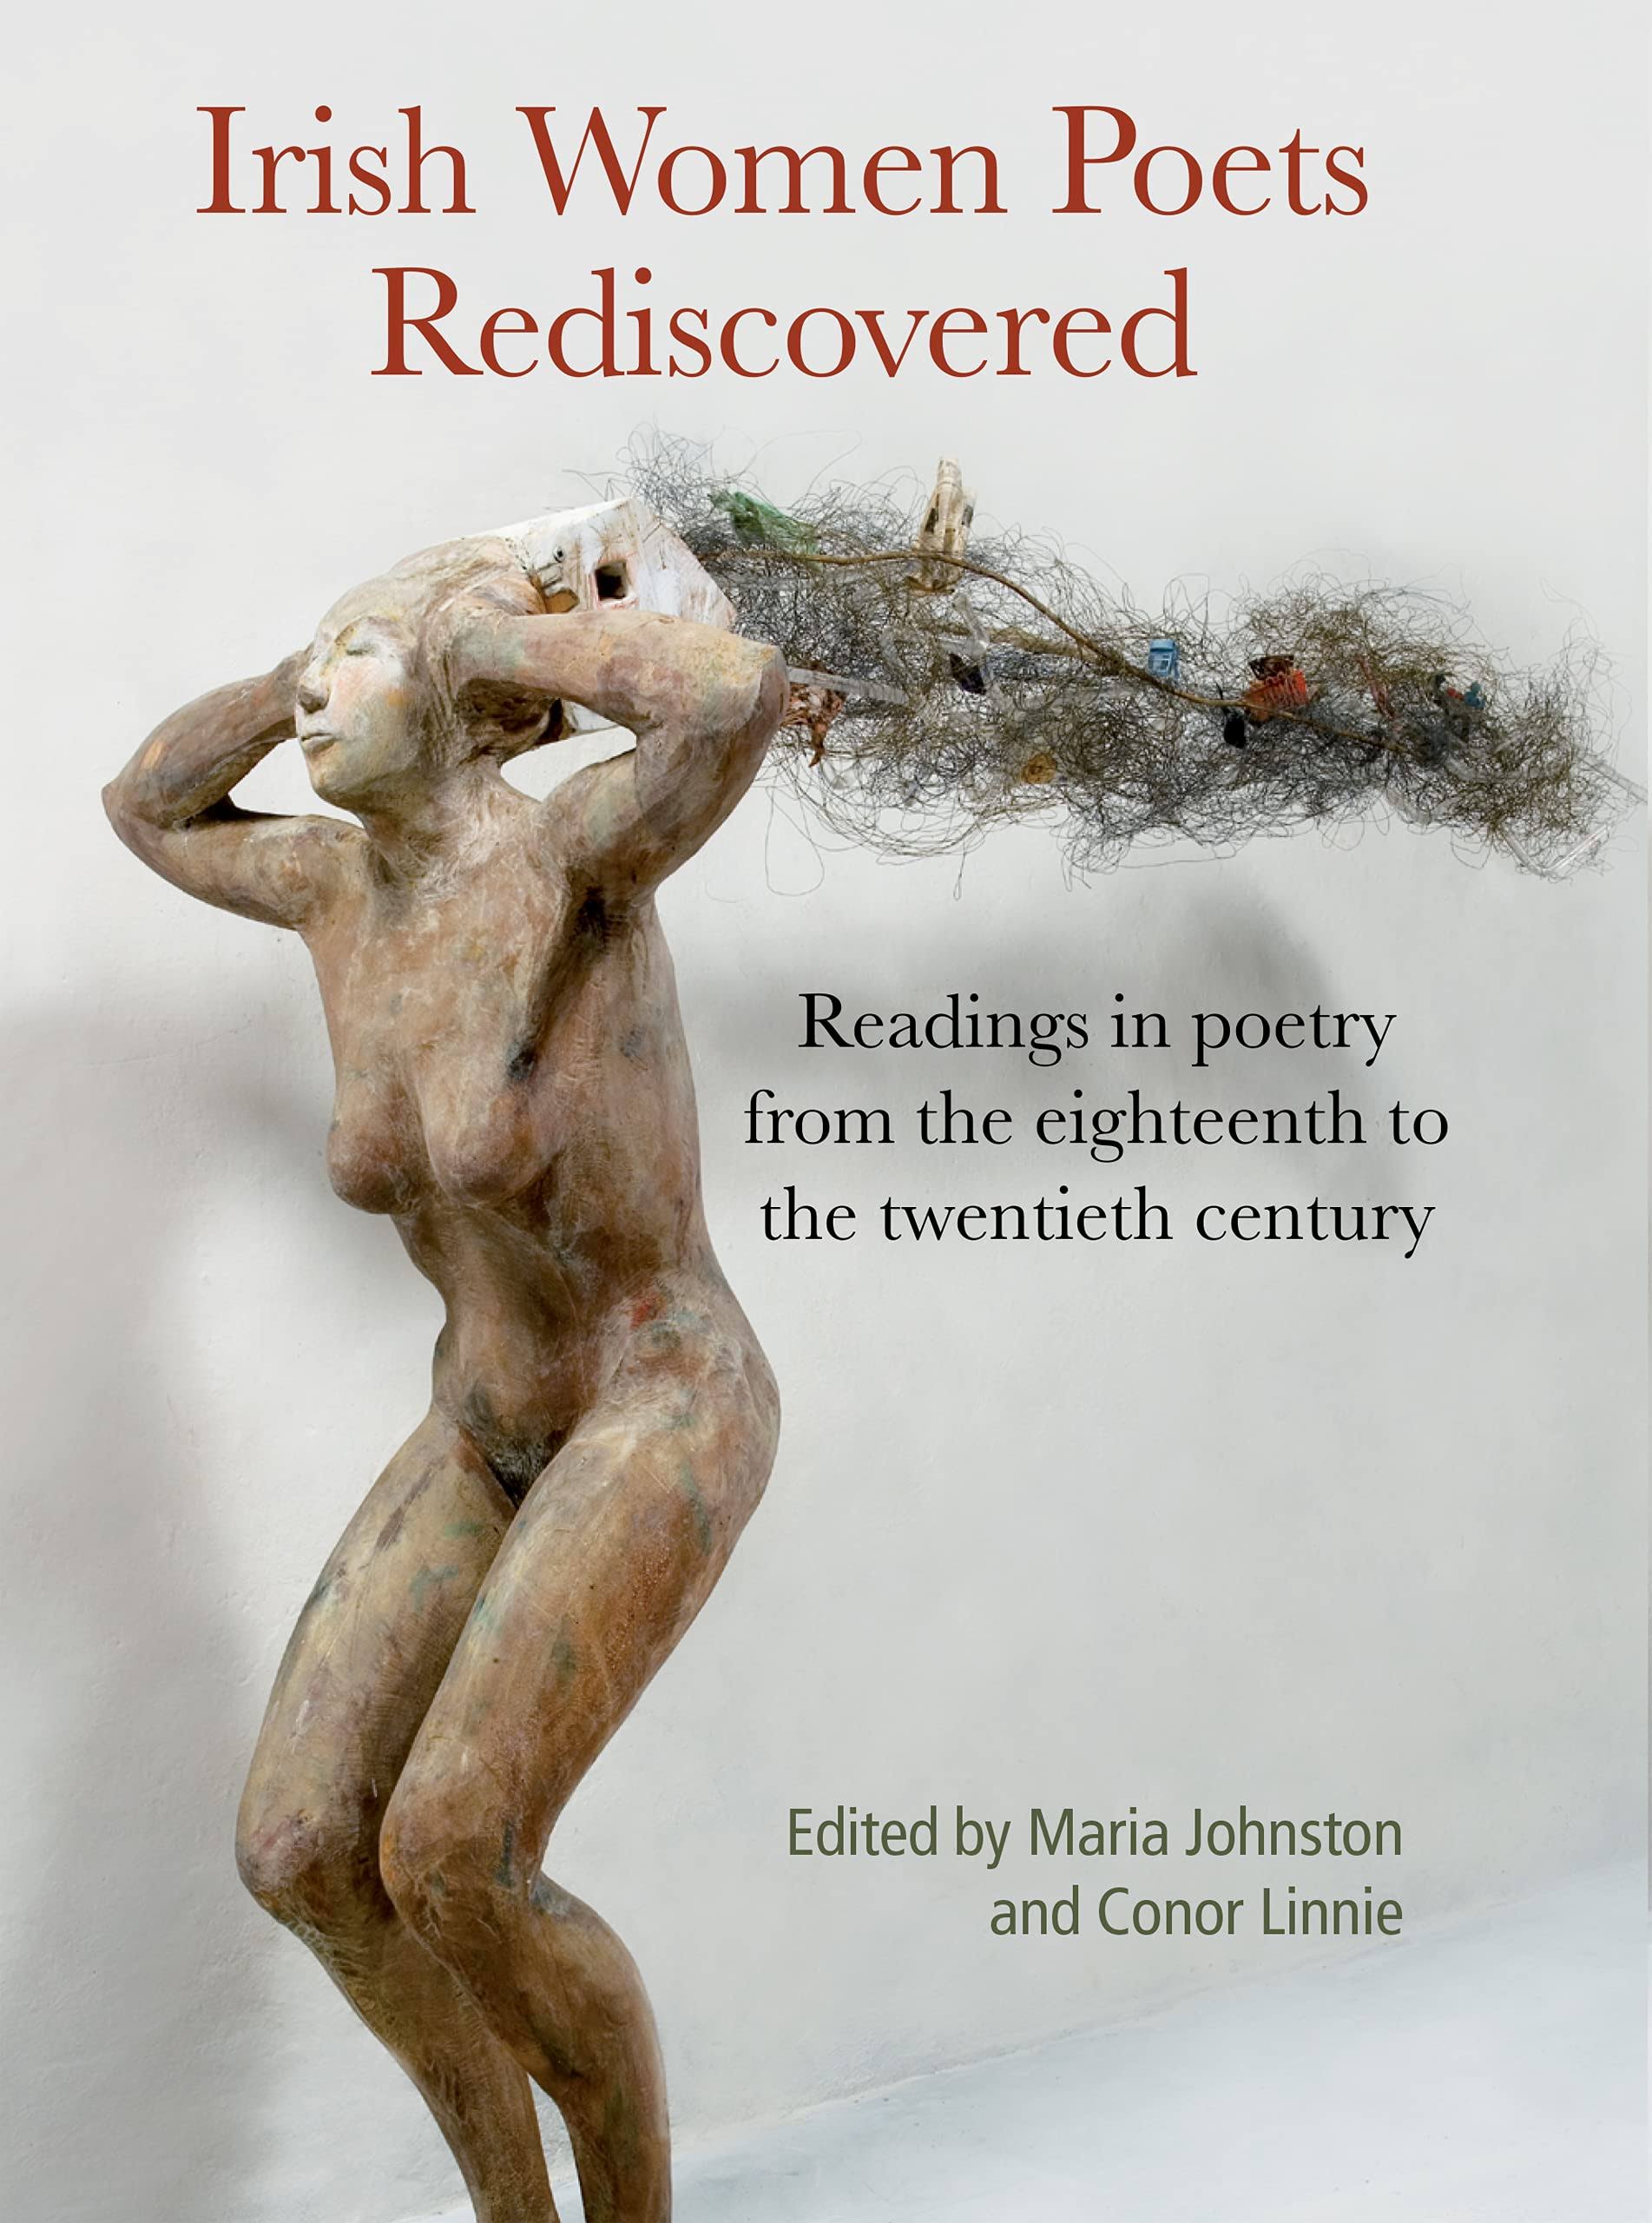 Irish Women Poets Rediscovered by Maria Johnston